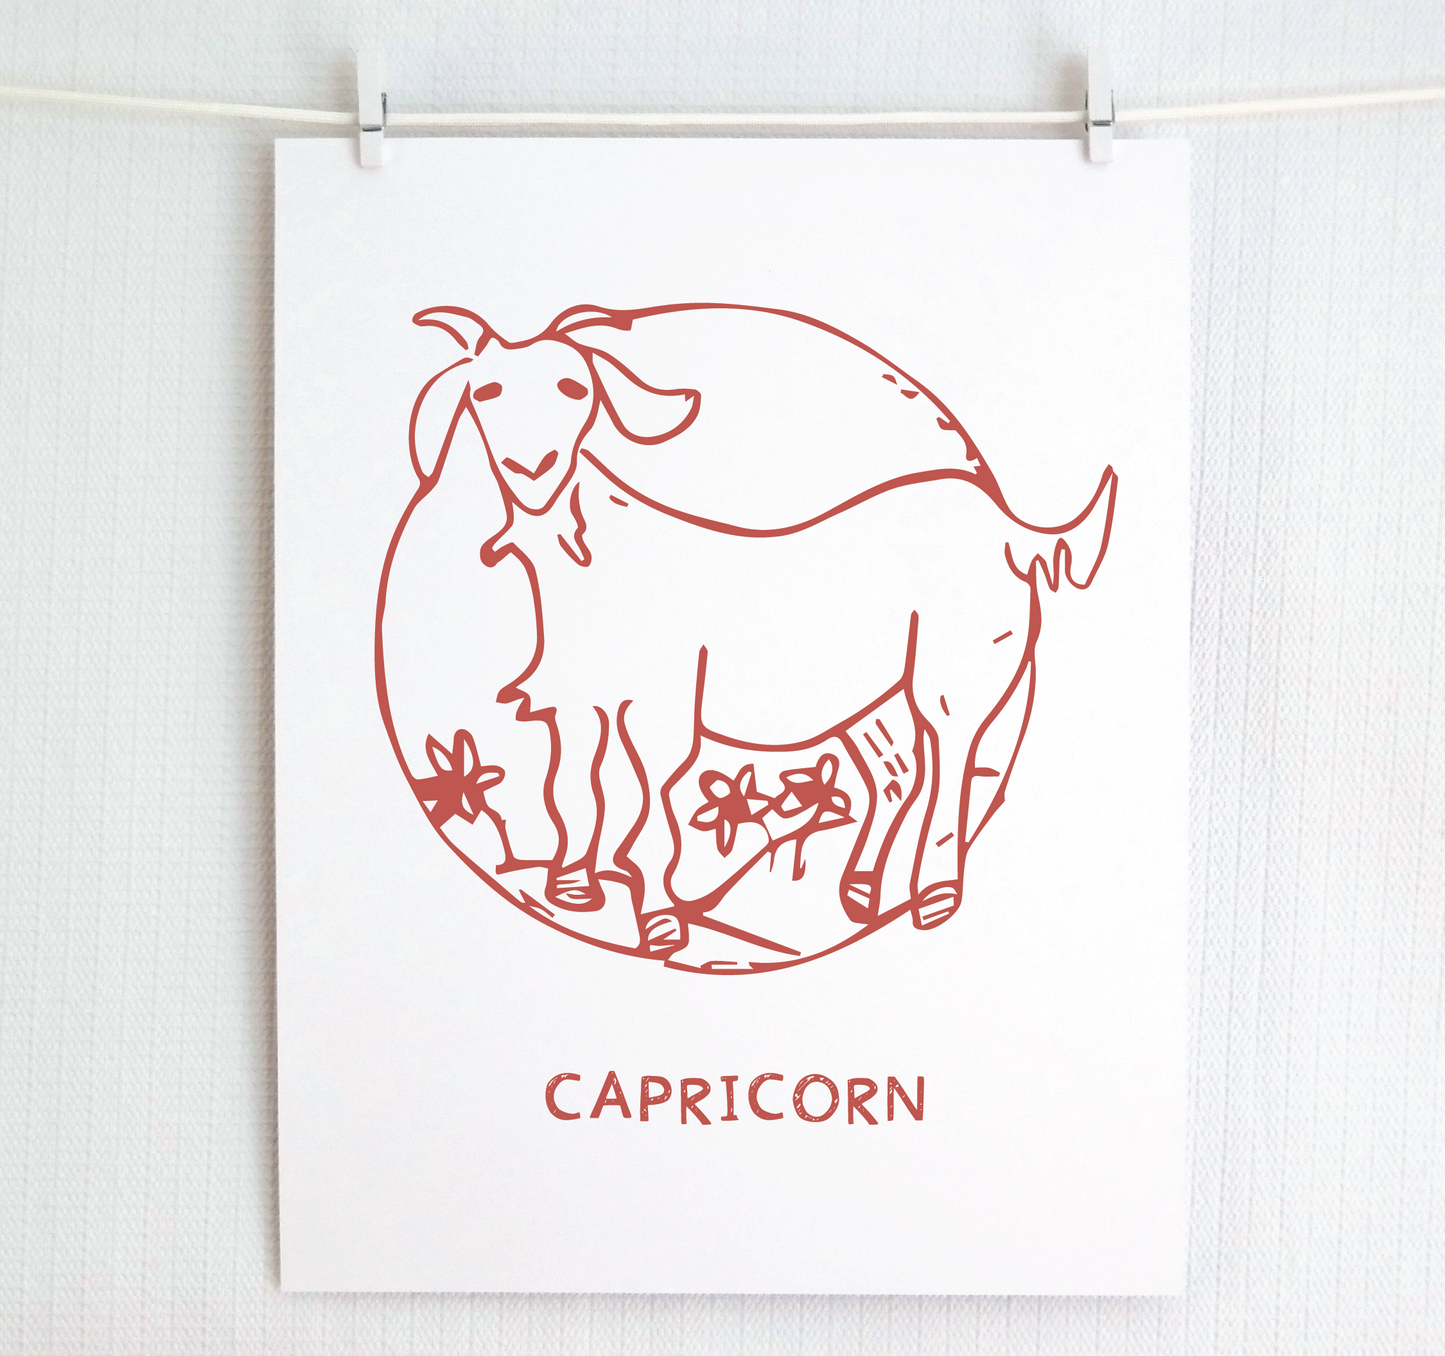 Signs of the Zodiac: CAPRICORN